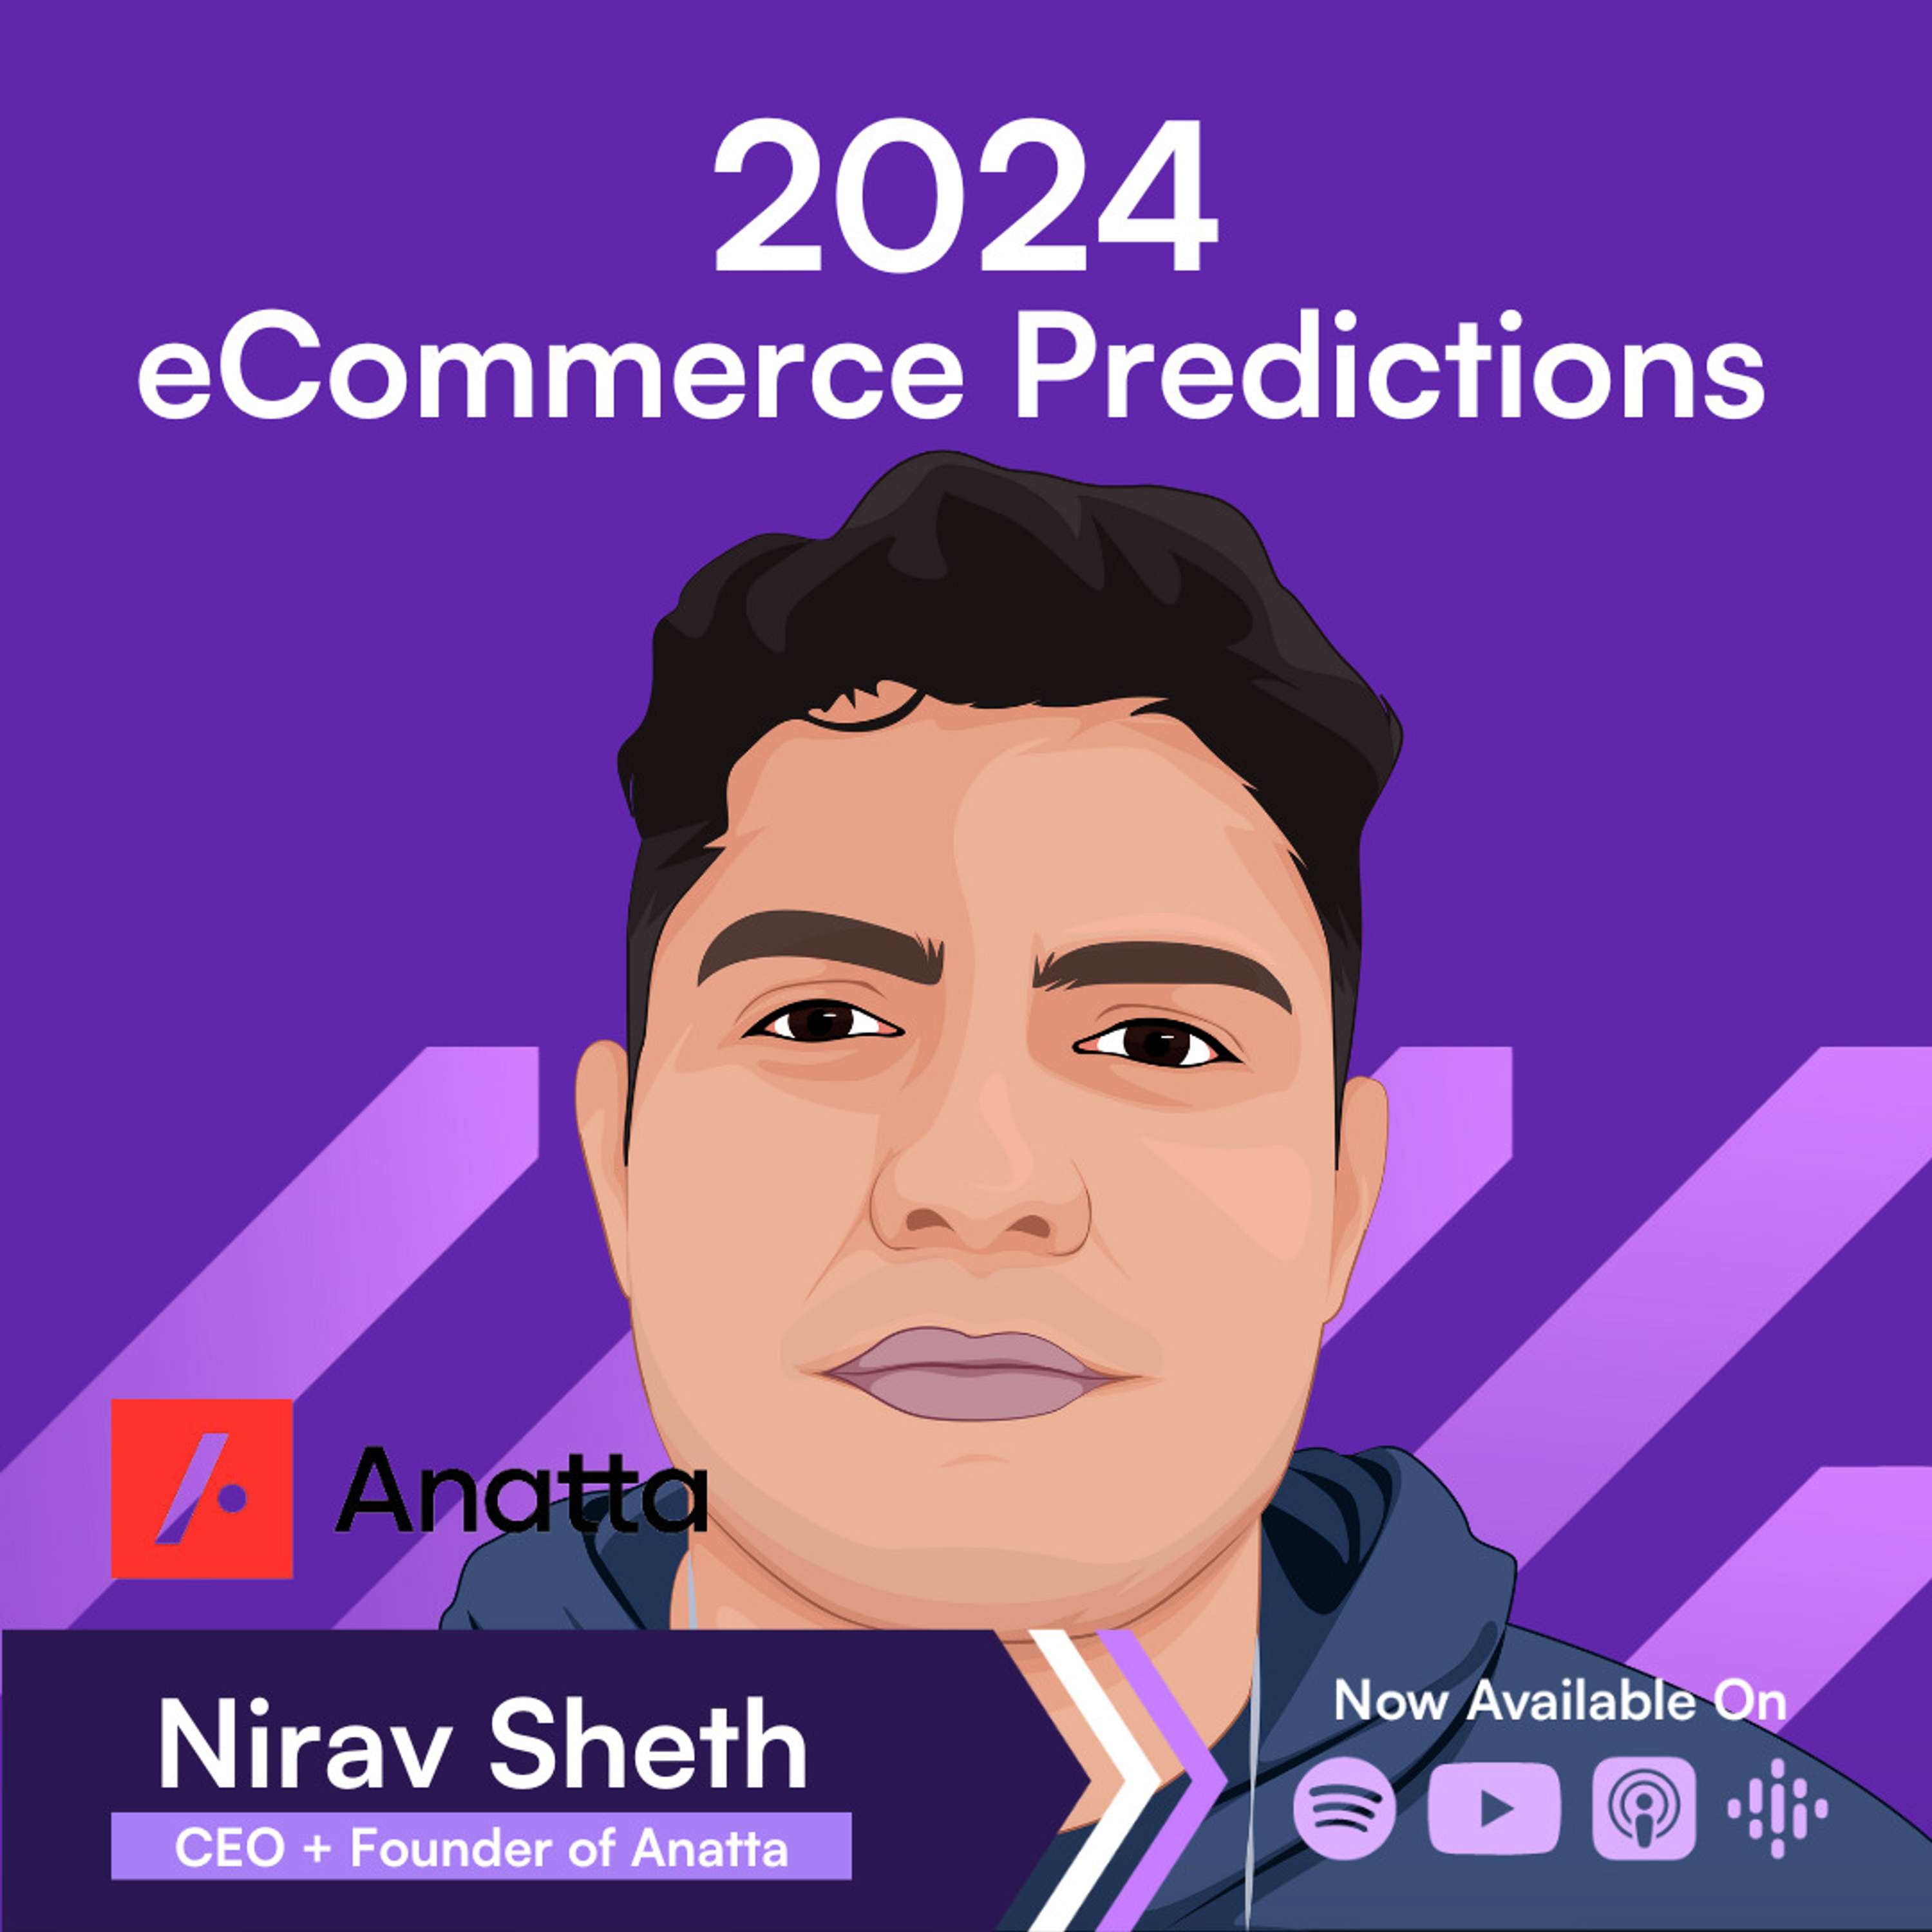 2024 eCommerce Predictions, what to expect → Nirav Sheth